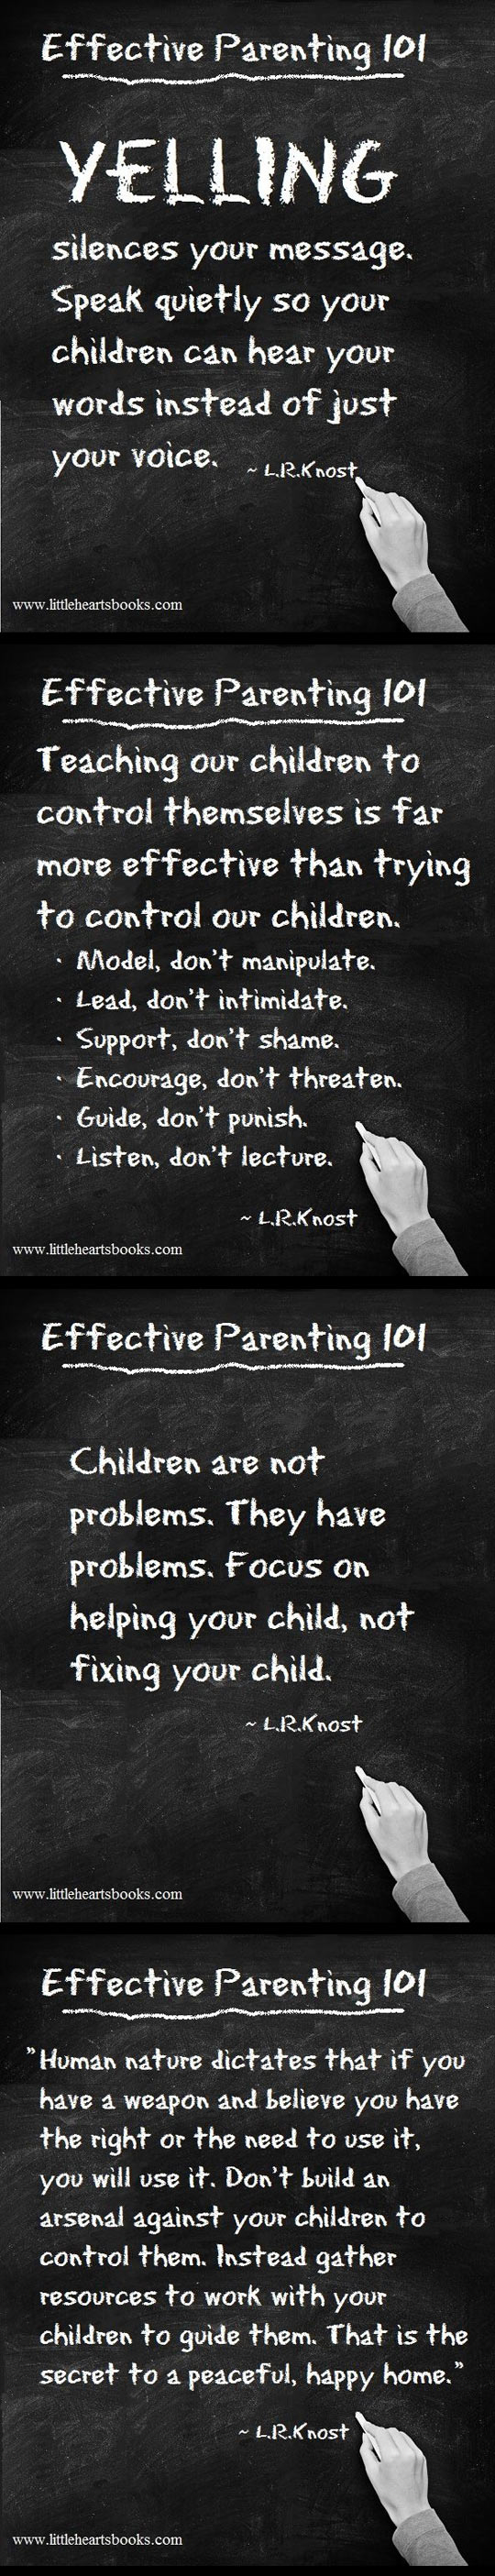 funny-effective-parenting-yelling-blackboard